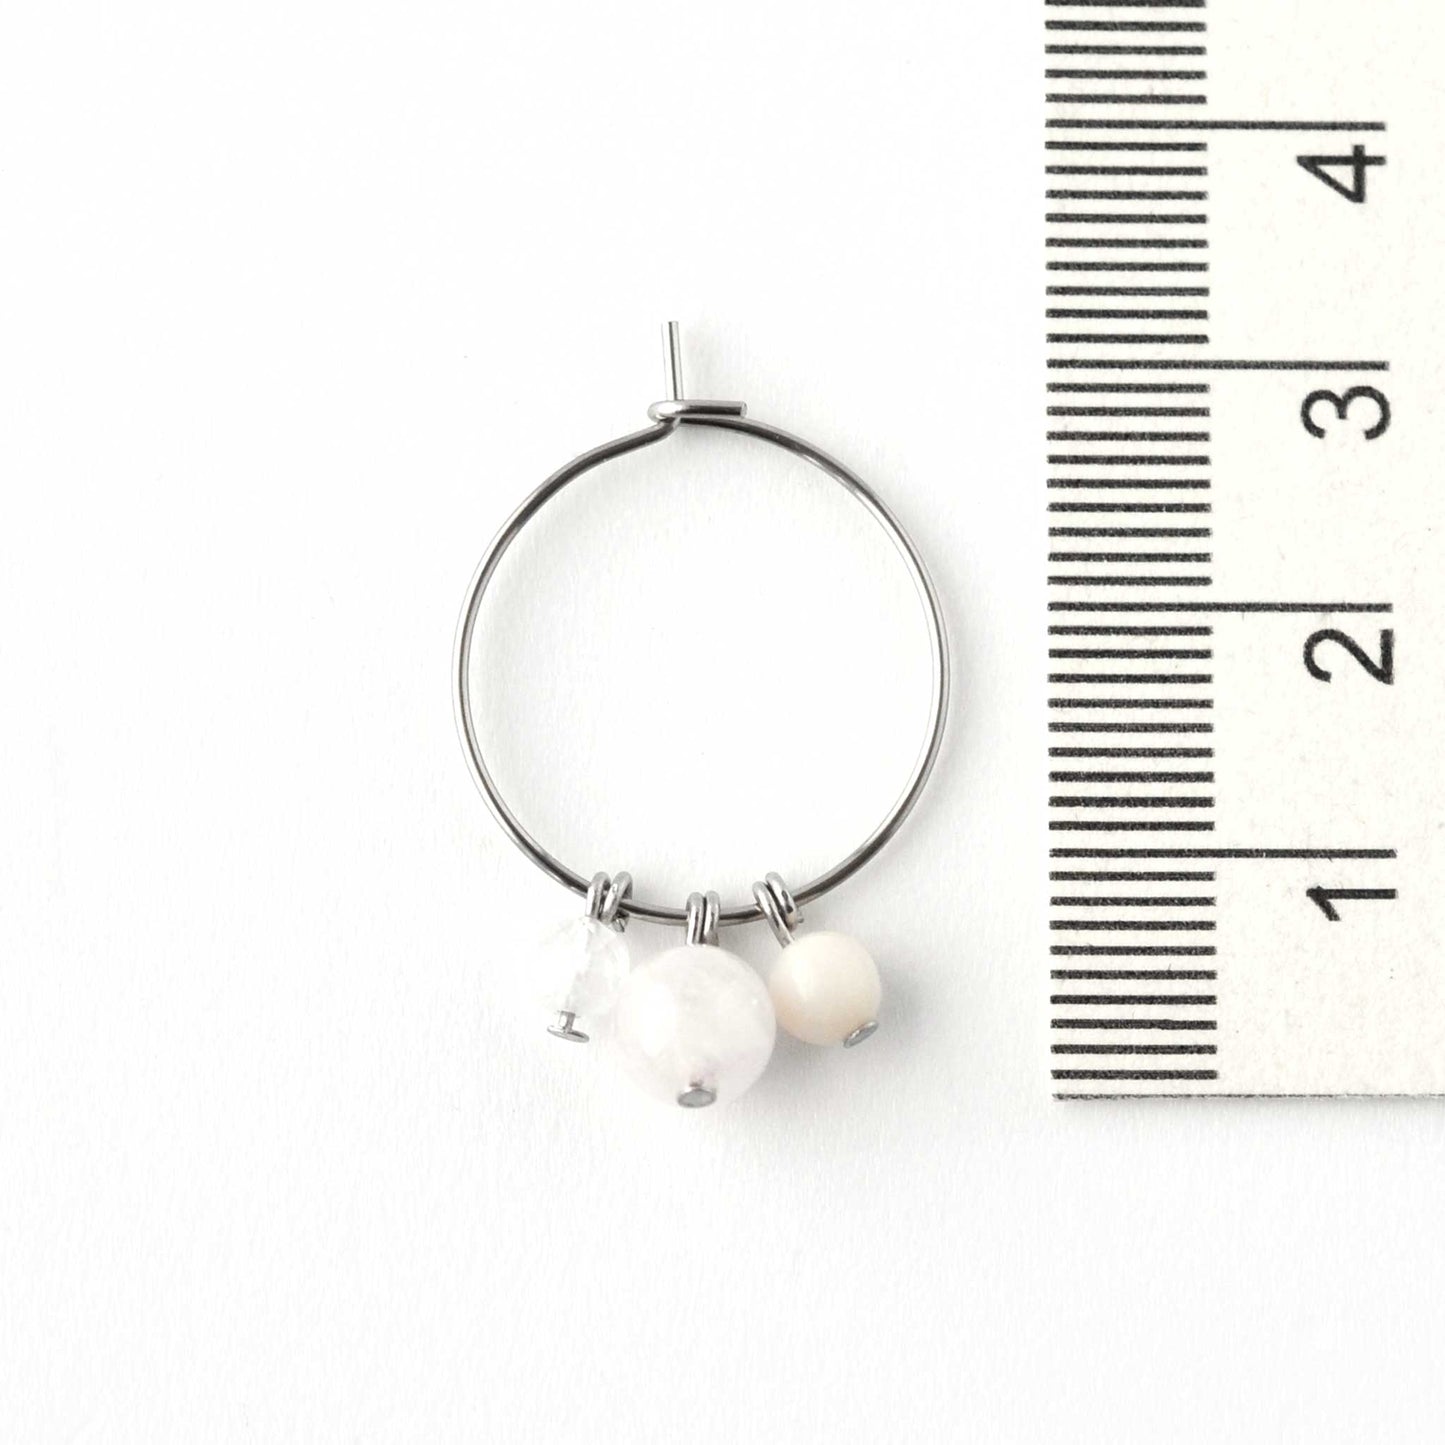 2cm diameter hoop earring with pale pink gemstone beads next to ruler